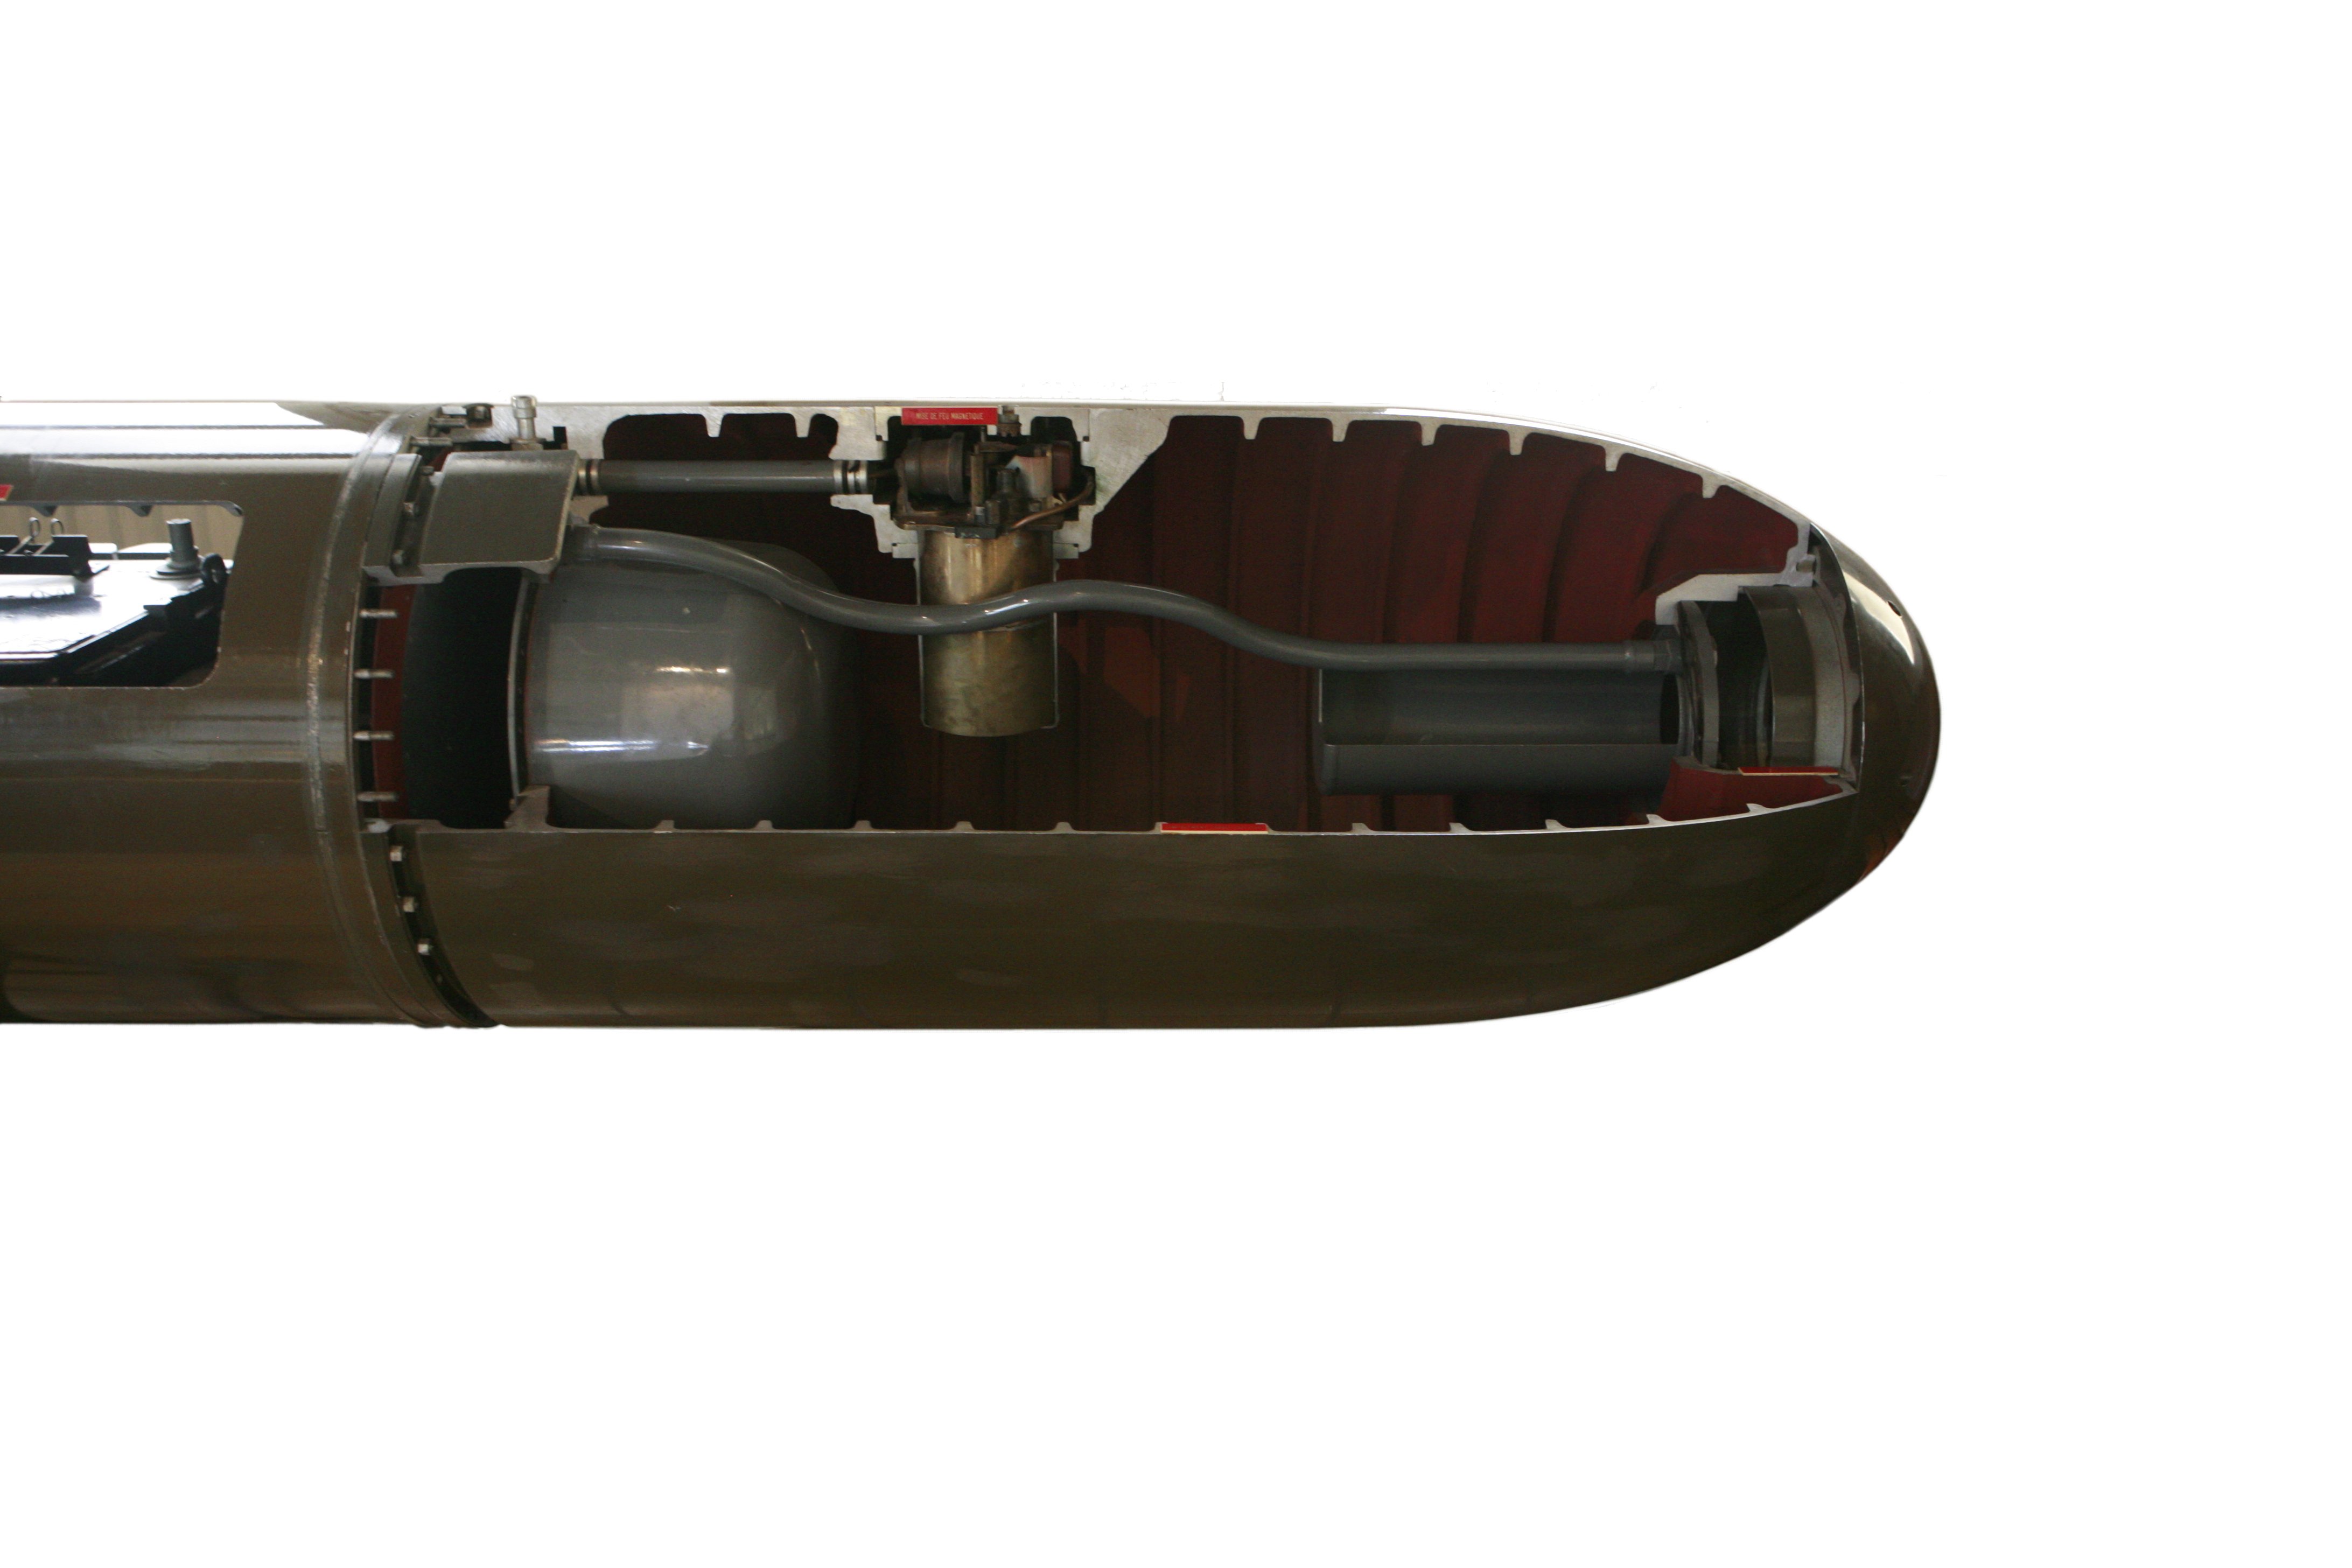 Большая торпеда. Торпеда УСЭТ-80. Торпеда 650 мм. Z590d Torpedo. Торпеда кит 65-76 калибра 650 мм.